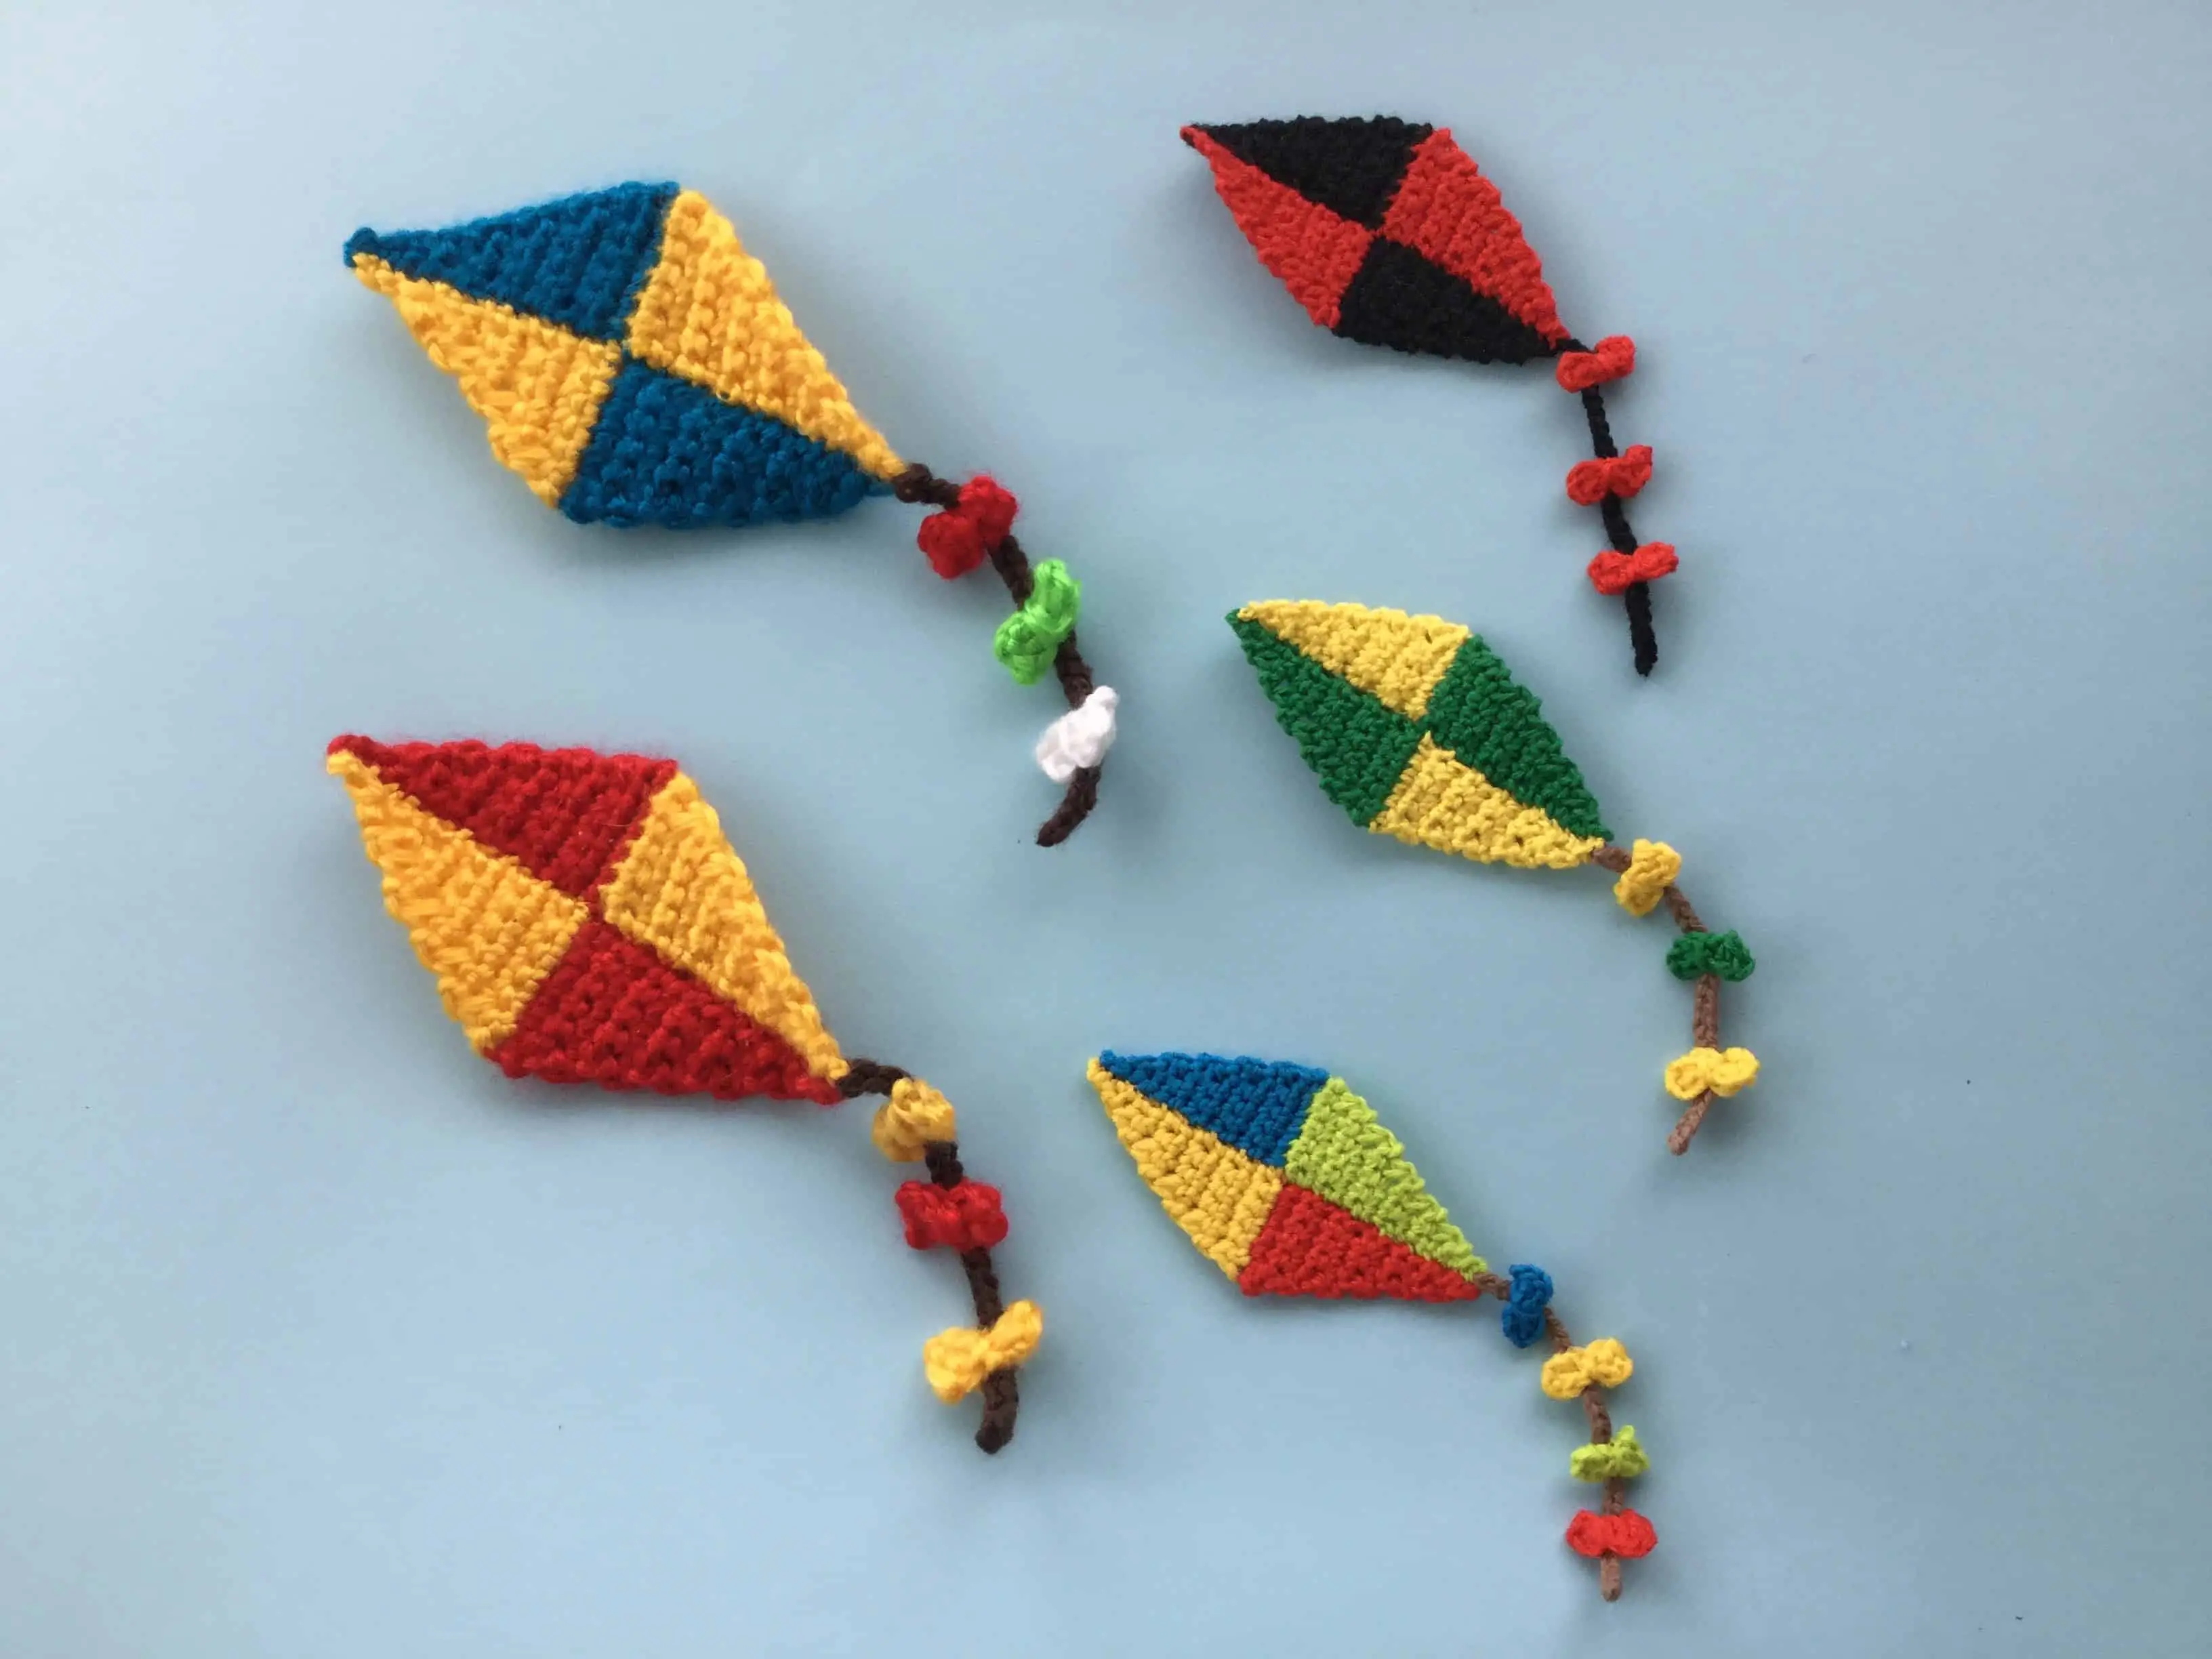 Finished crochet kite group landscape